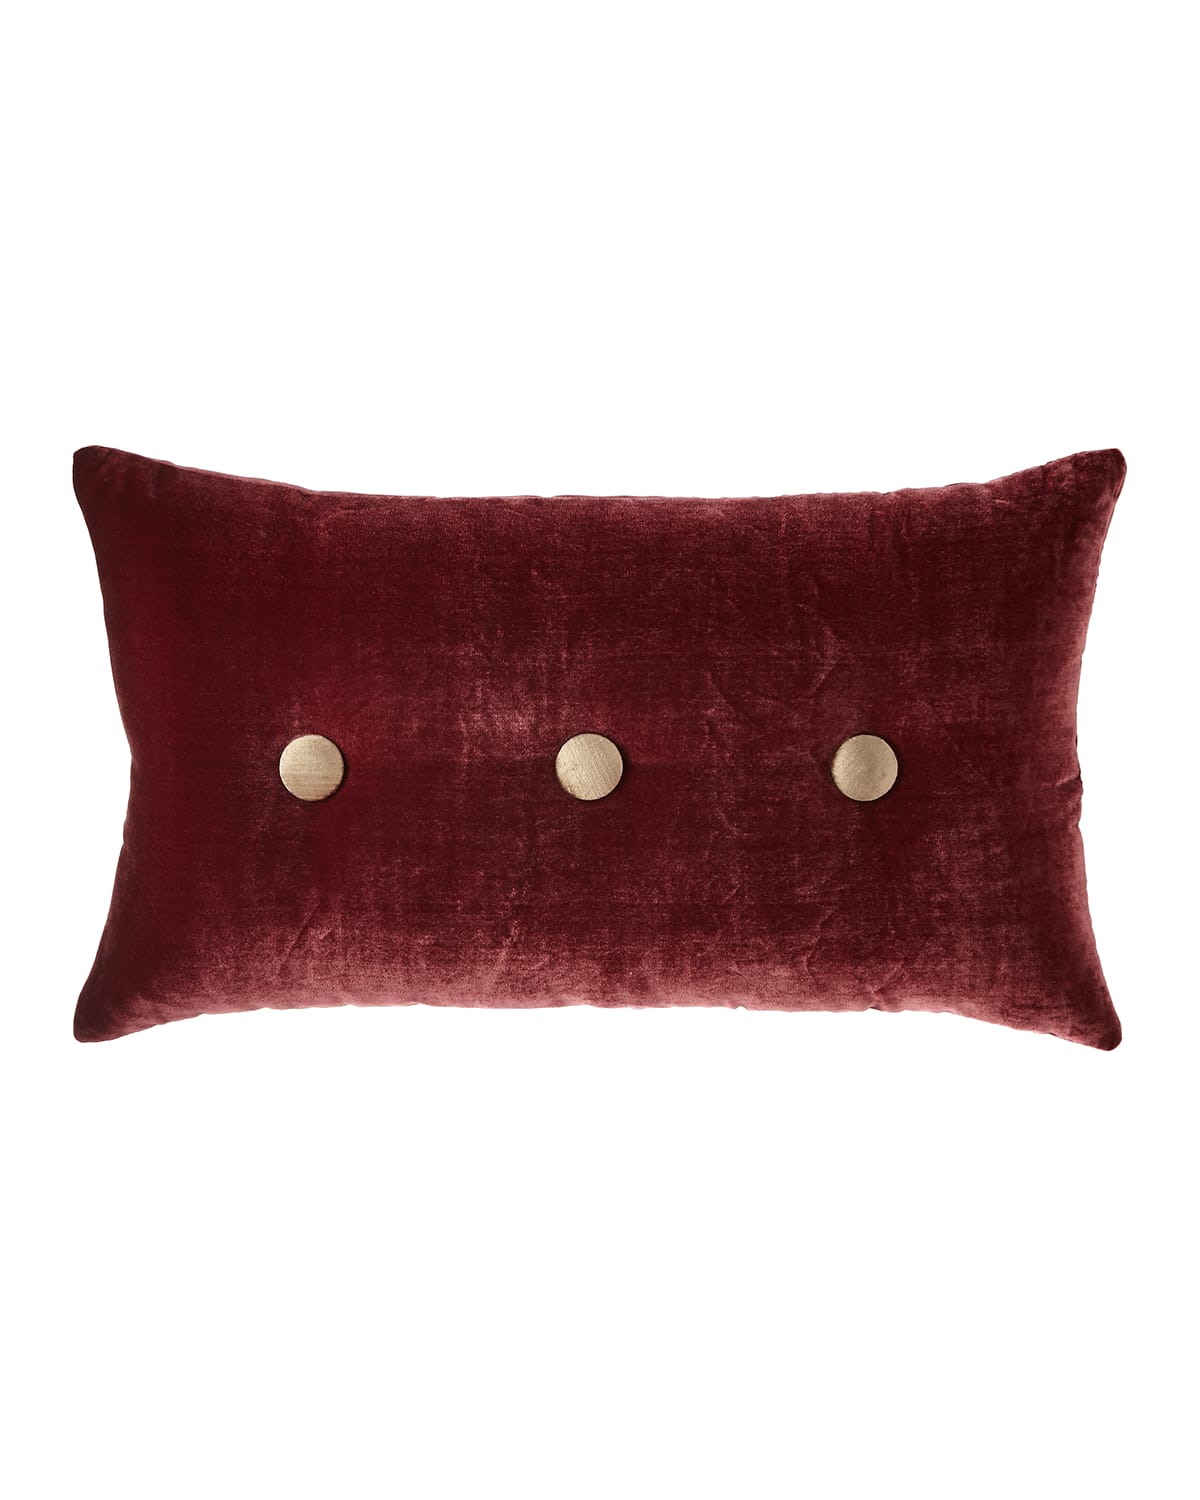 Image Sweet Dreams Spencer Velvet Oblong Pillow with Buttons